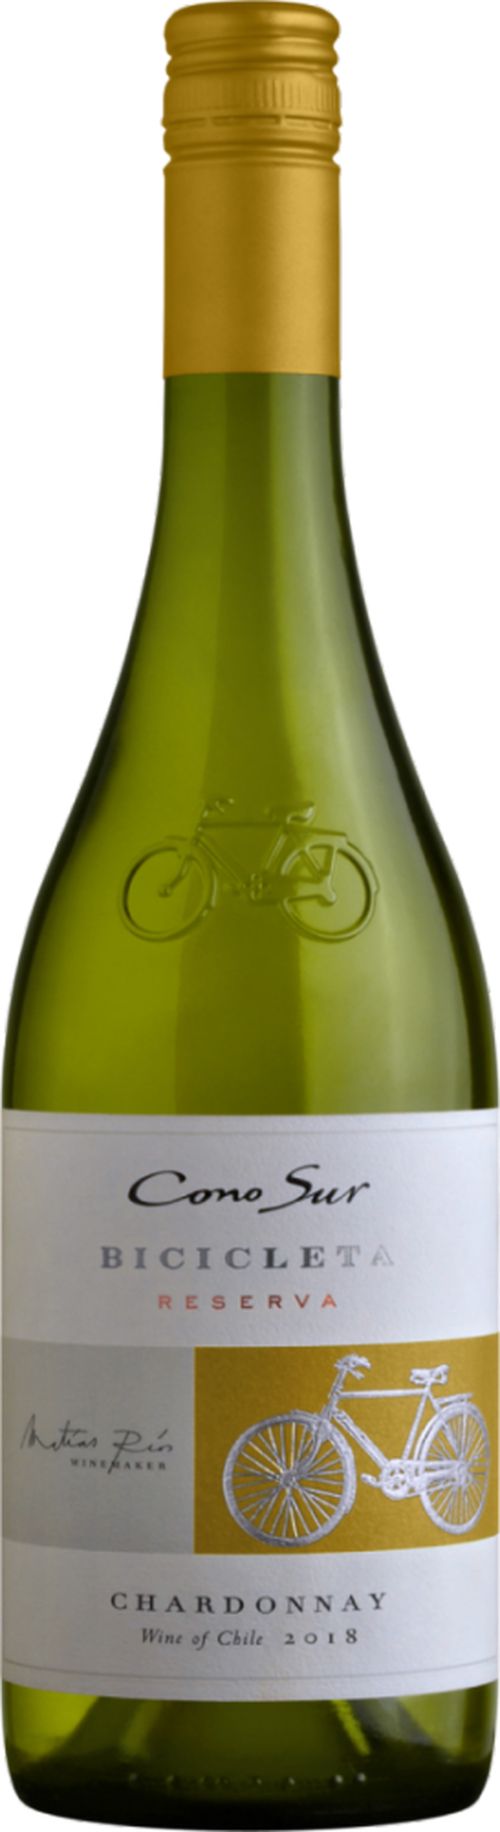 Cono Sur Bicicleta Chardonnay 2018 0,75l 12,5%